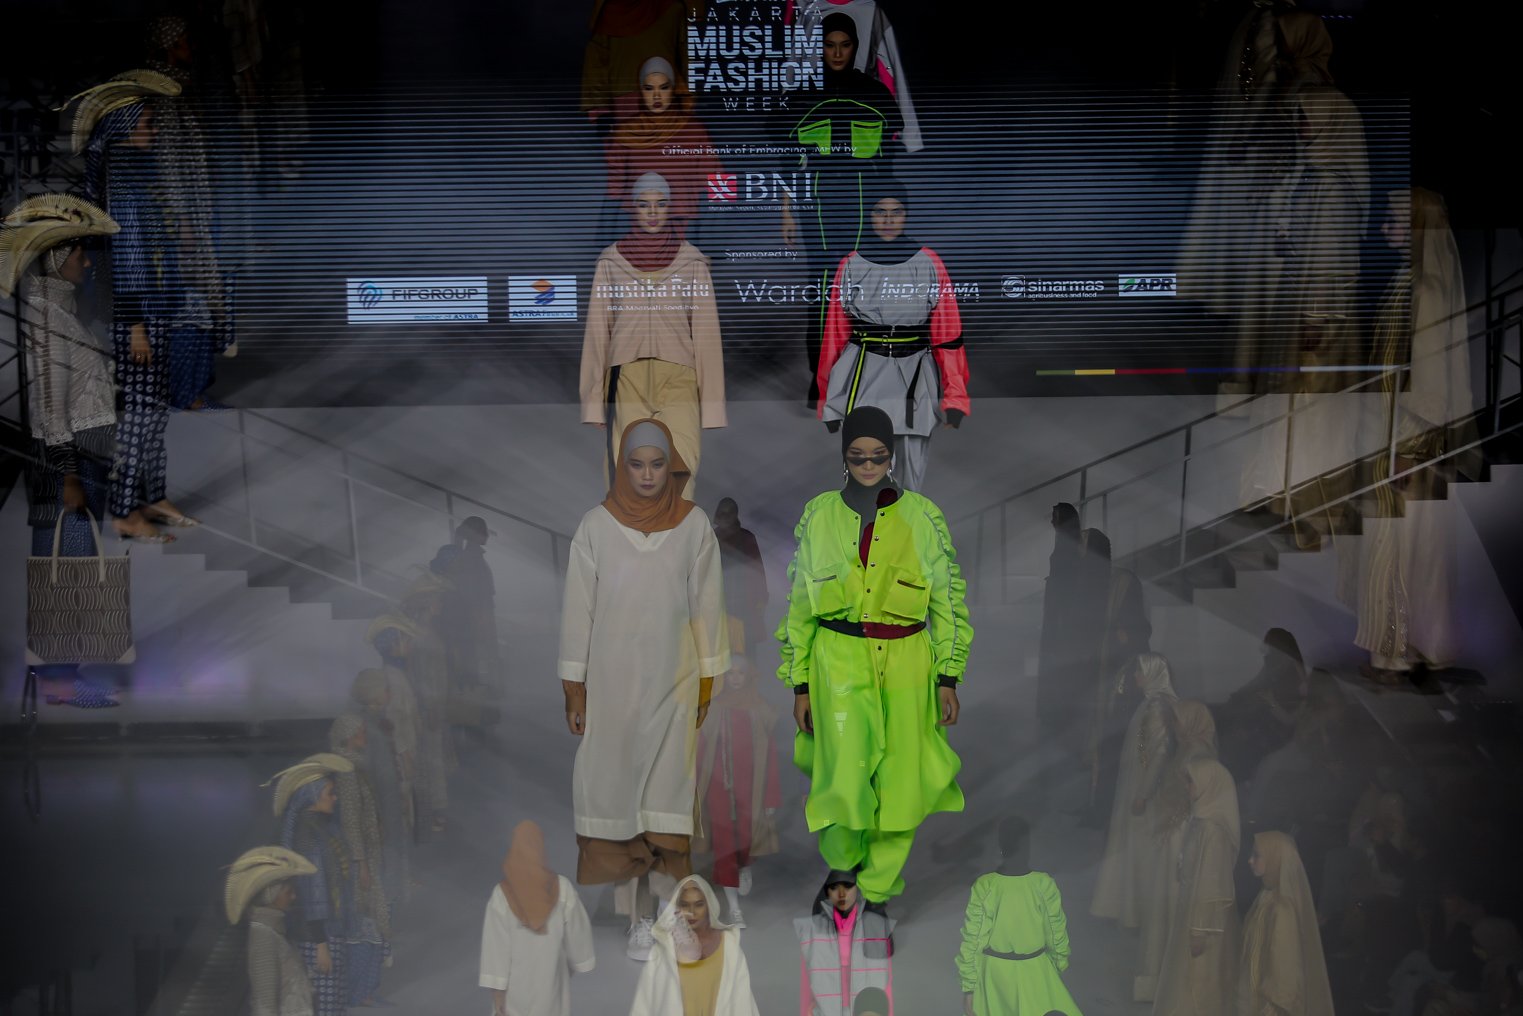 Model memperagakan busana muslim pada acara Embracing Jakarta Muslim Fashion Week di Aquatic Center, Gelora Bung Karno (GBK), Senayan, Jakarta, Kamis (18/11/2021). Sebagai langkah memperkenalkan kekuatan fesyen muslim Indonesia ke pasar global dan menetapkan Indonesia sebagai pusat fesyen muslim dunia, Kementerian Perdagangan RI bersama KADIN memprakarsai event Jakarta Muslim Fashion Week.